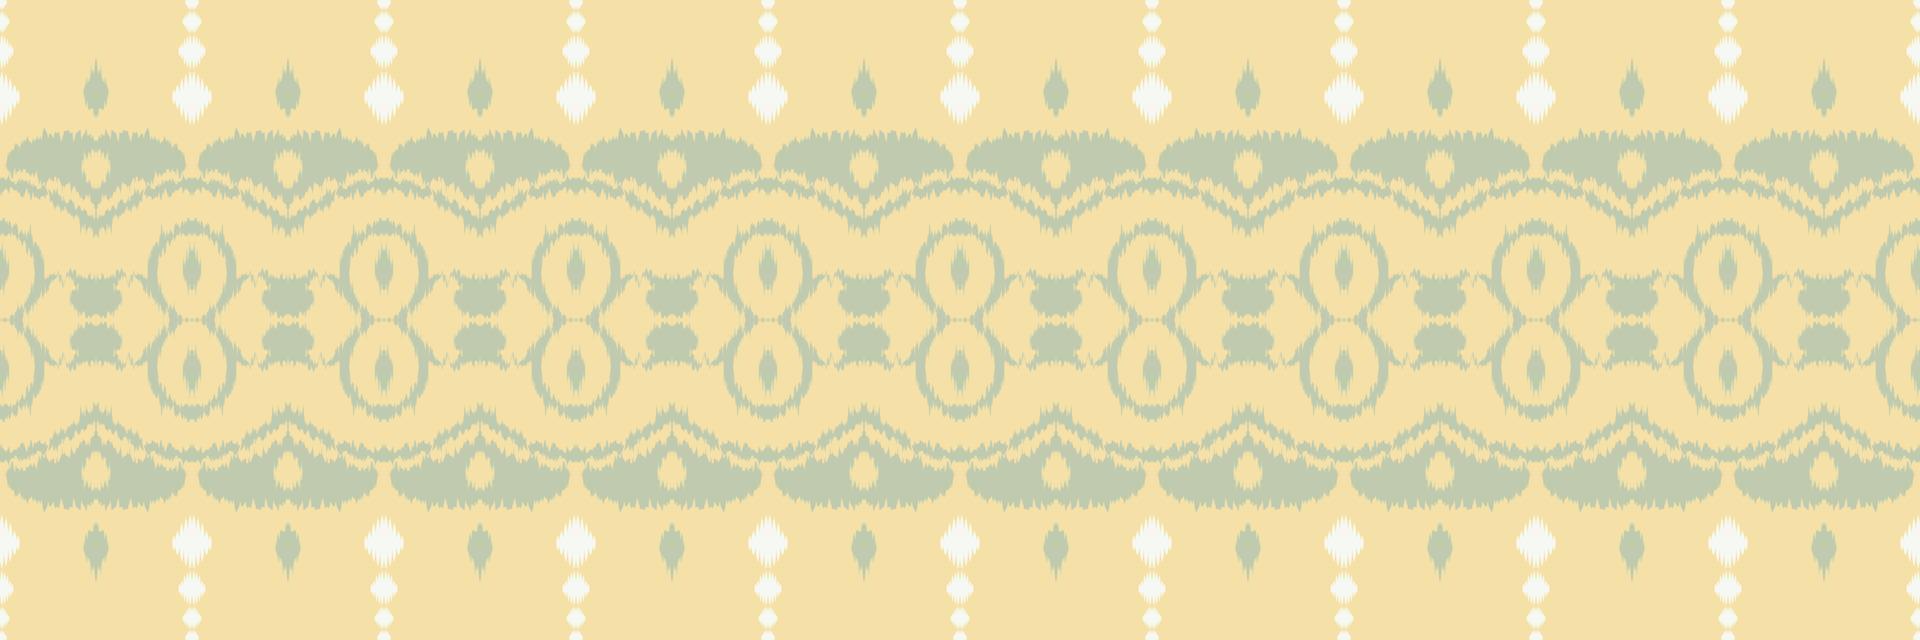 Ikat floral tribal background Seamless Pattern. Ethnic Geometric Batik Ikkat Digital vector textile Design for Prints Fabric saree Mughal brush symbol Swaths texture Kurti Kurtis Kurtas